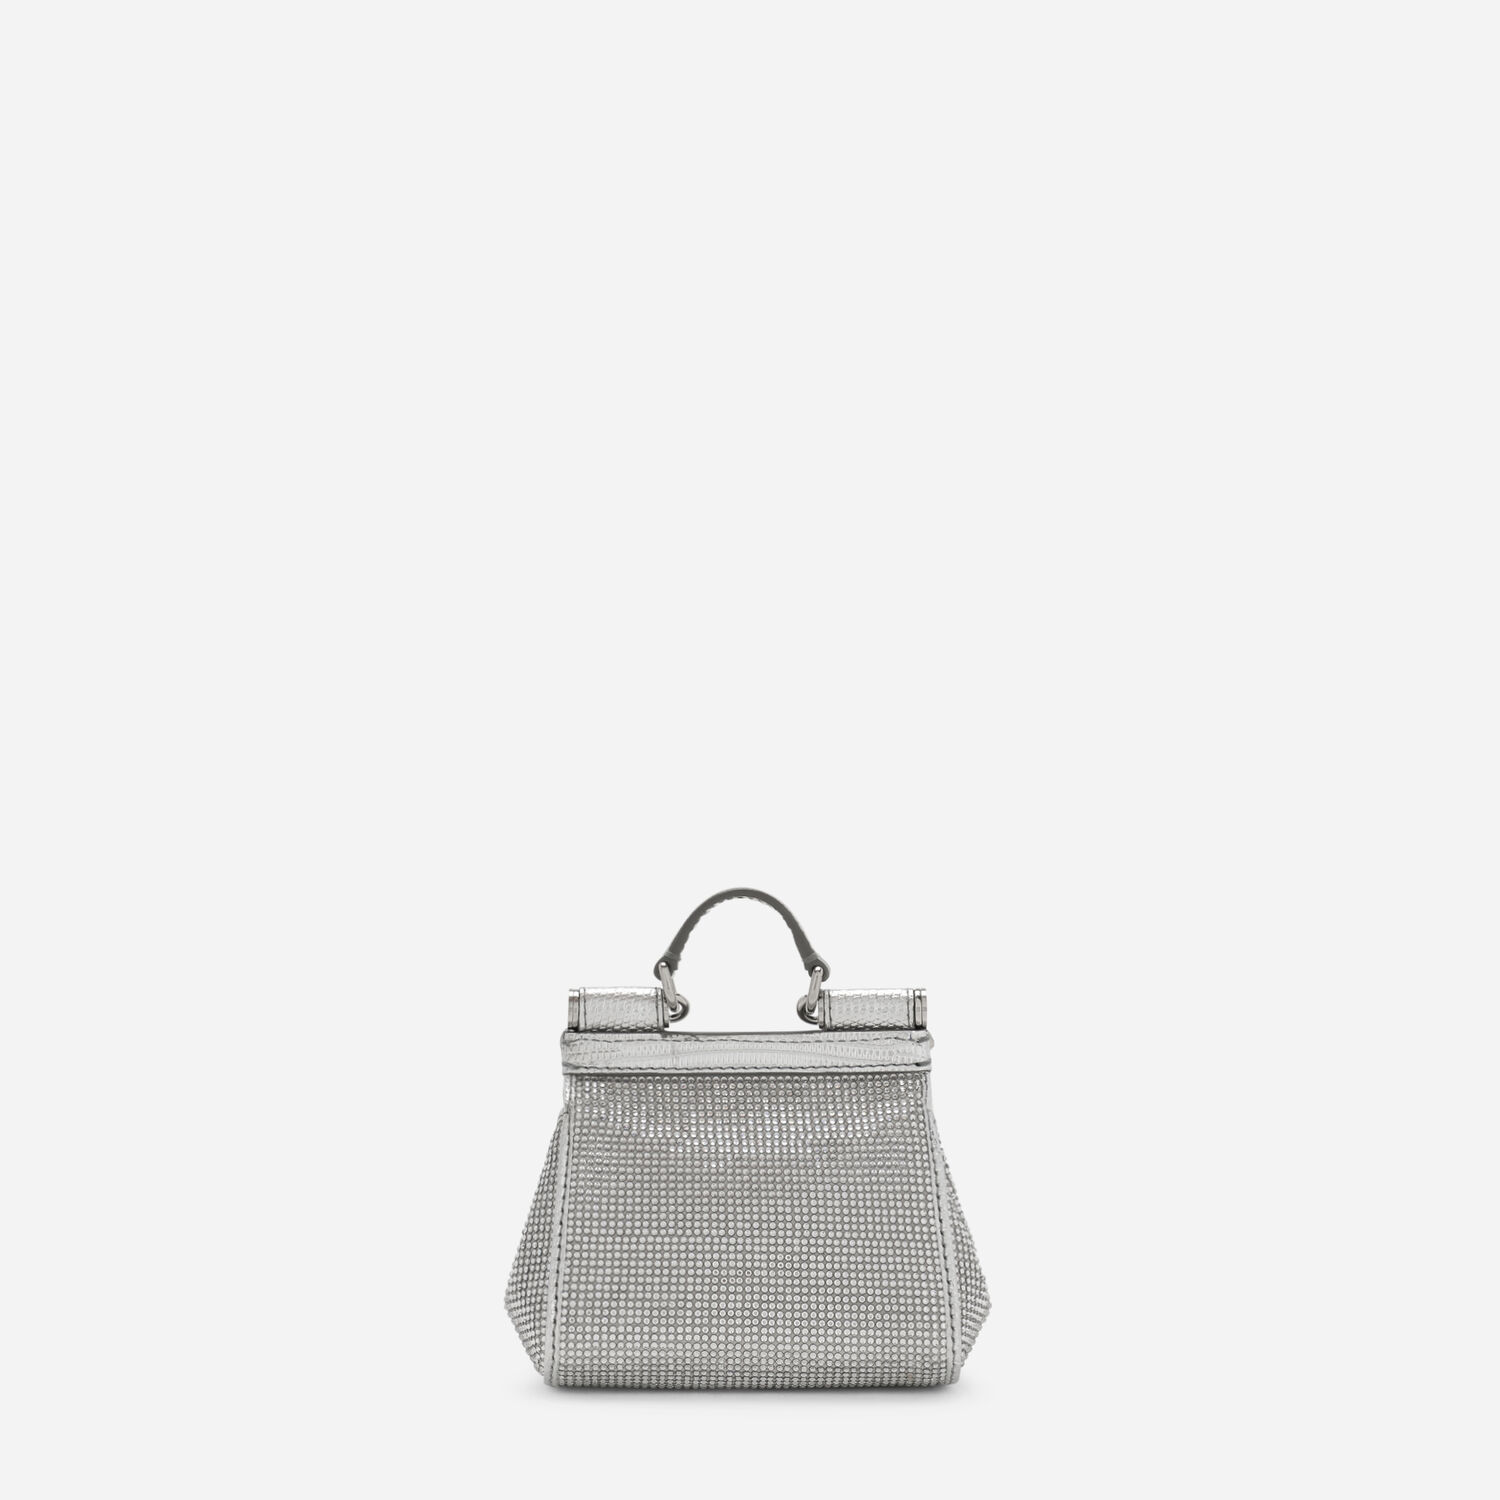 Totes bags Dolce & Gabbana - Sicily Limited Edition medium bag